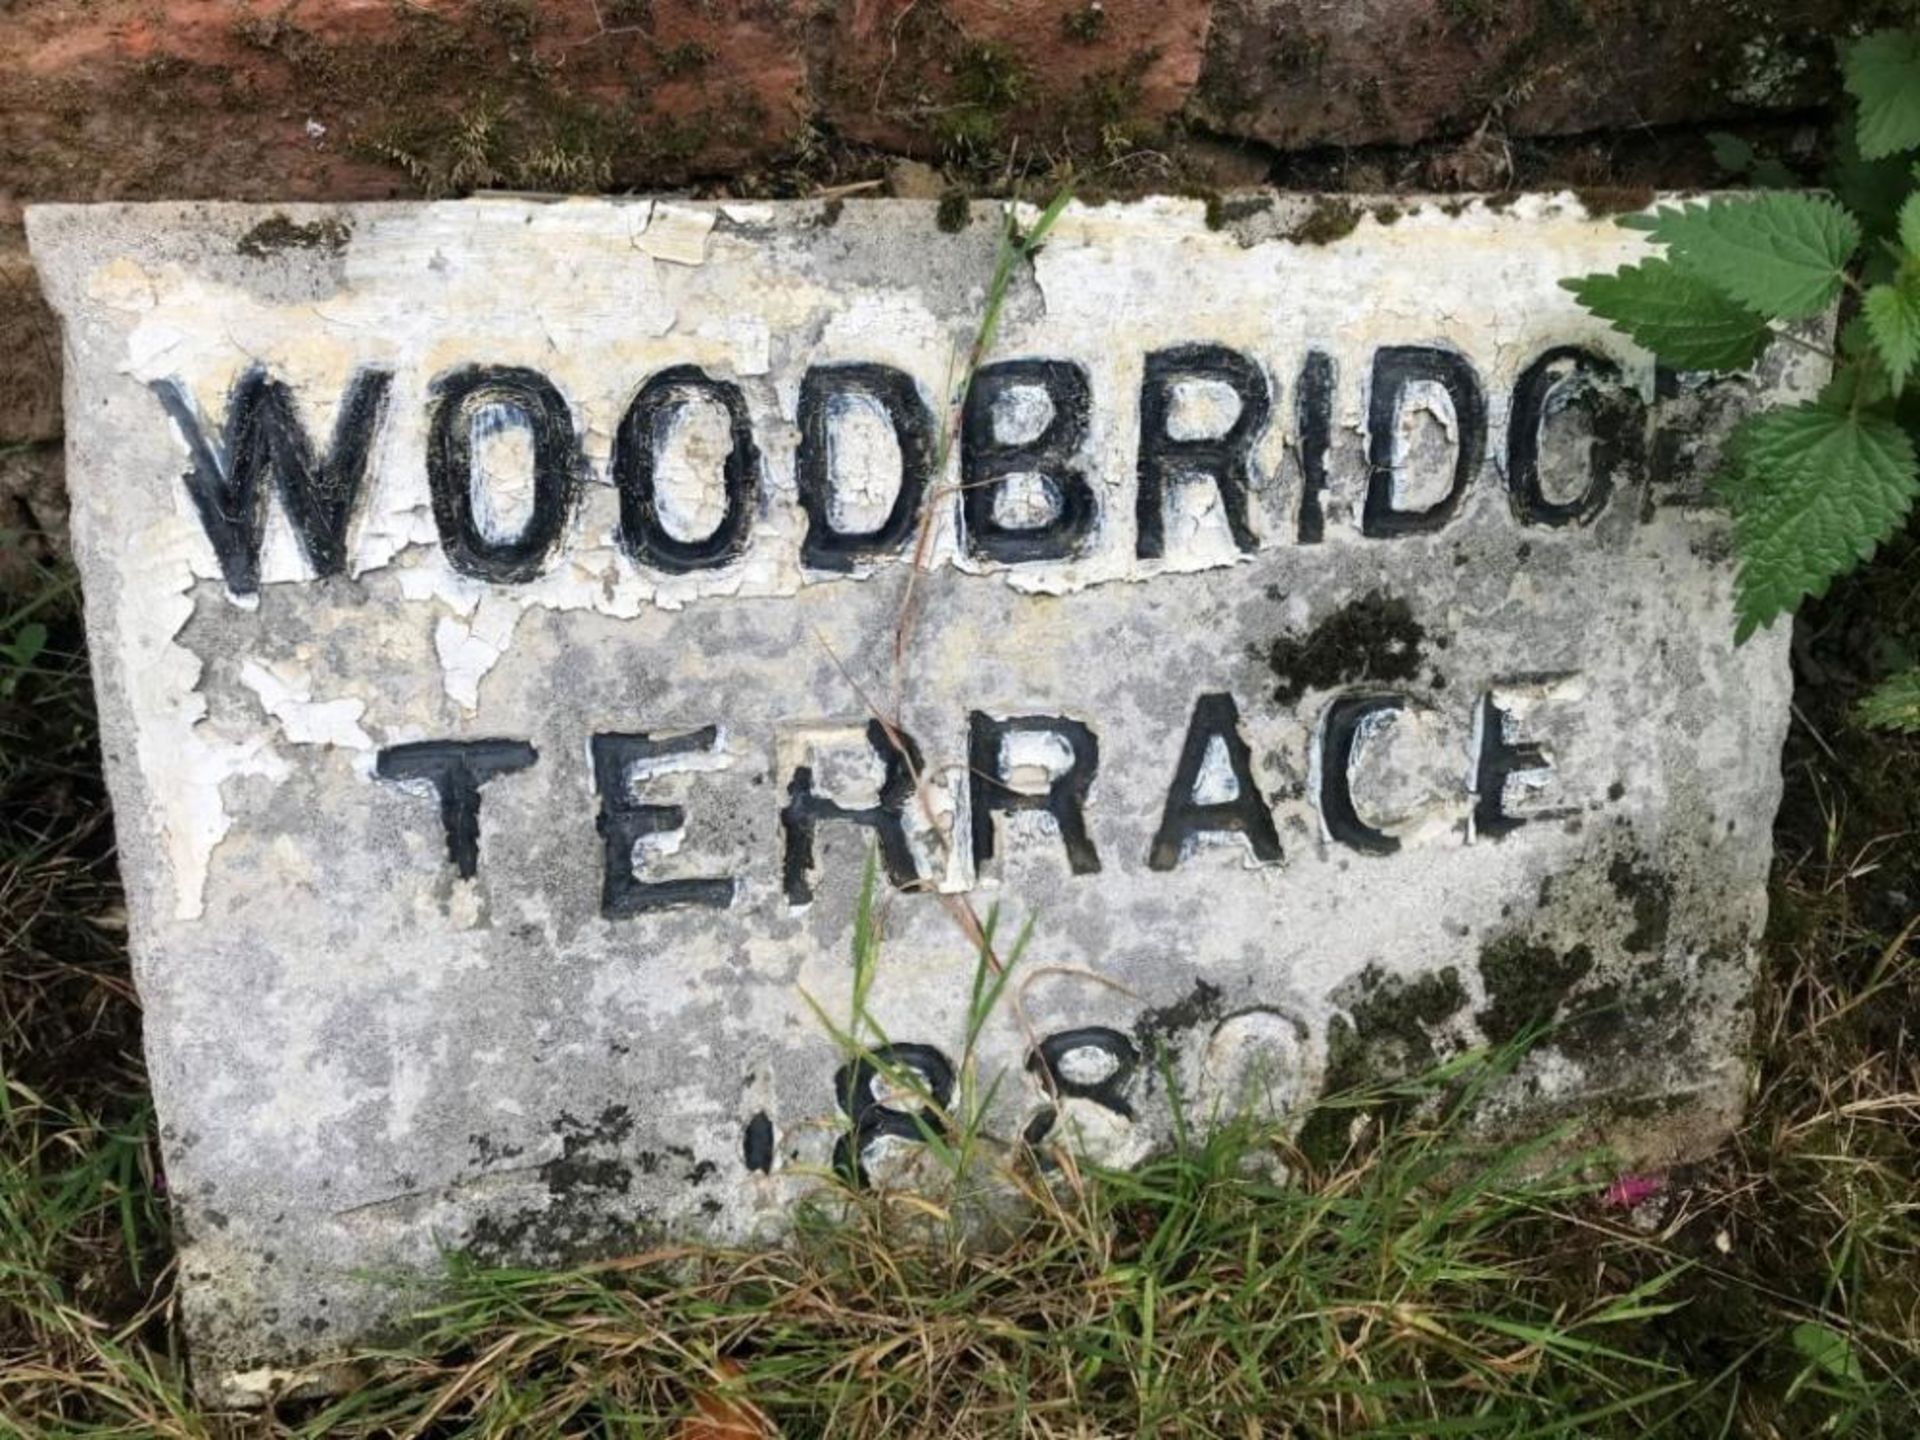 1 x Reclamation aged Stone Slab 'Woodbridge Terrace 1880' - Ref: JB185 - Pre-Owned - NO VAT ON THE